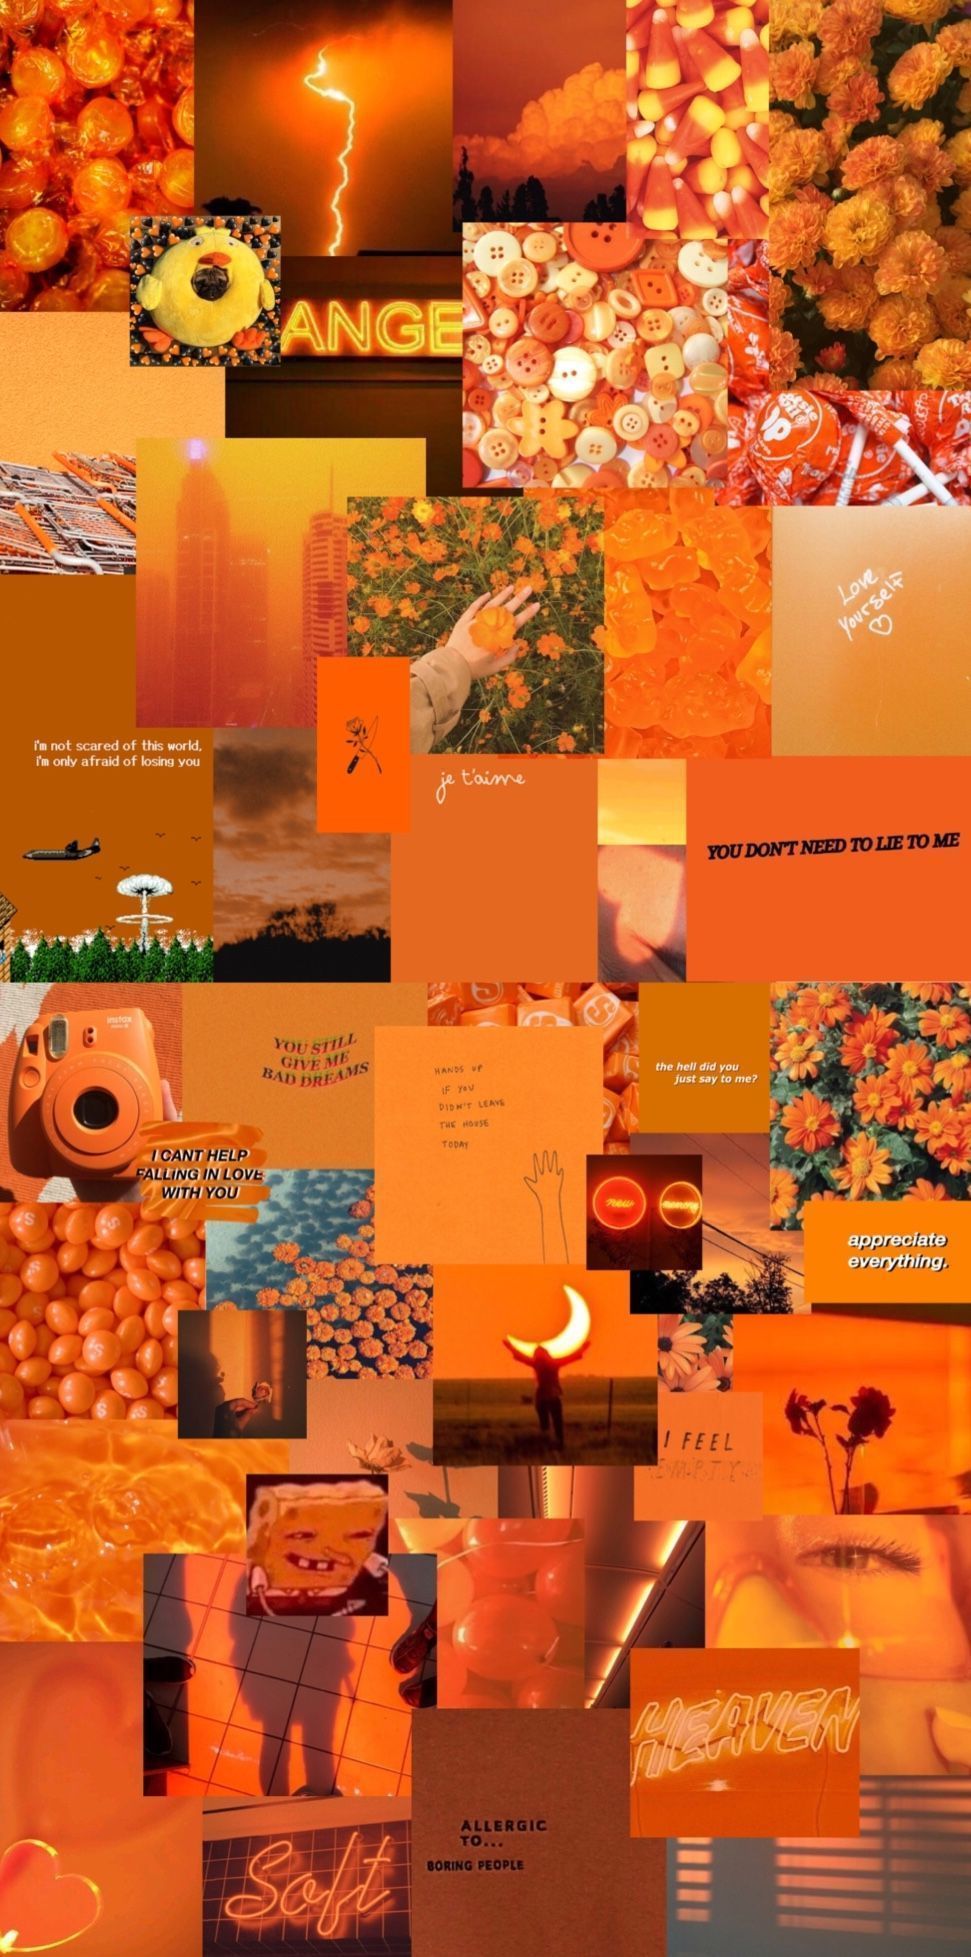 Aesthetic phone background collage of orange and yellow photos - Orange, neon orange, pastel orange